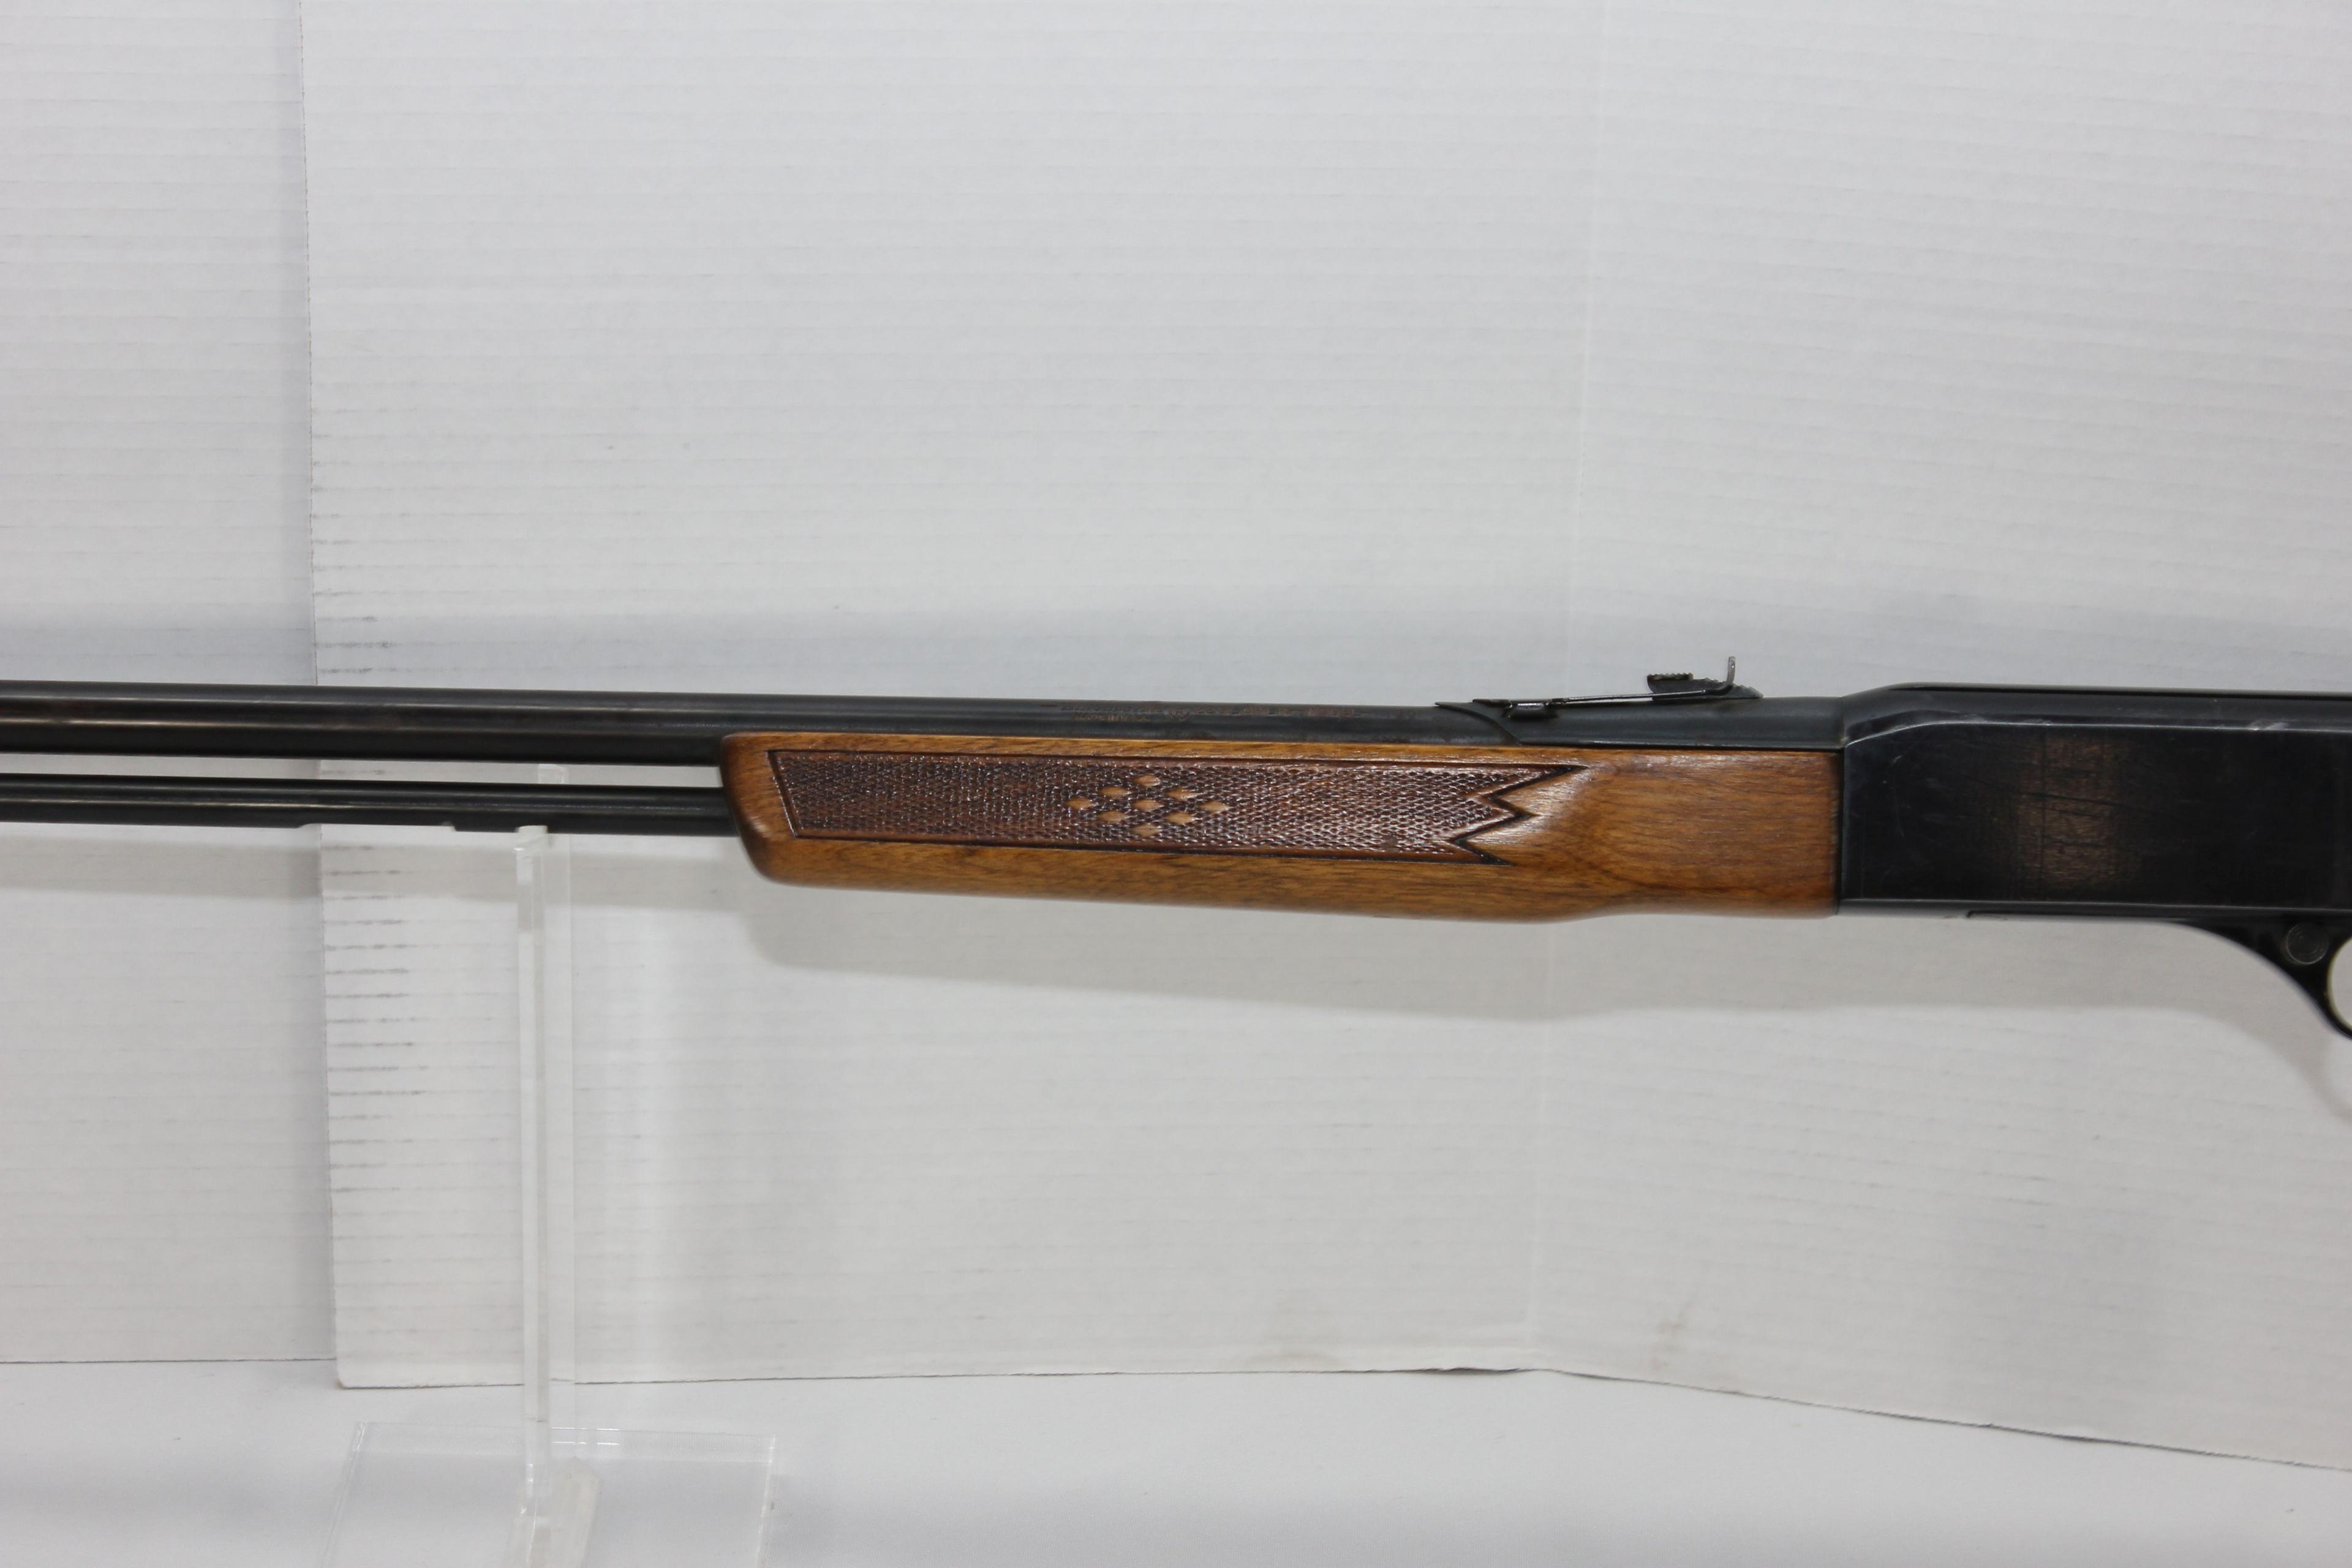 Winchester Model 190 .22 S/L/LR Tube Fed Semi-Automatic Rifle w/Deluxe Checkered Stock; SN 797529